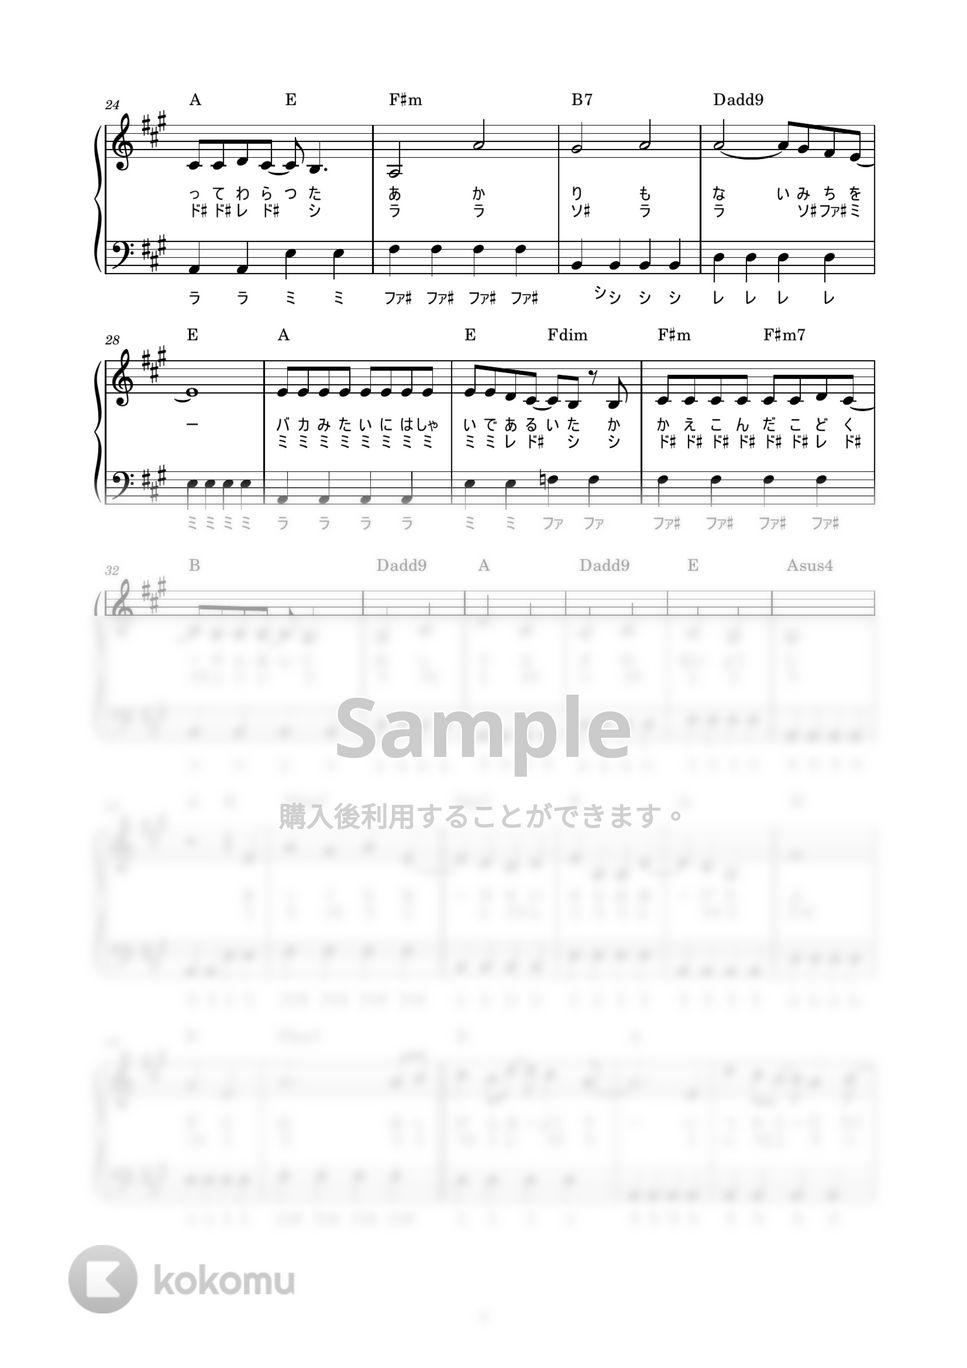 supercell - 君の知らない物語 (かんたん / 歌詞付き / ドレミ付き / 初心者) by piano.tokyo